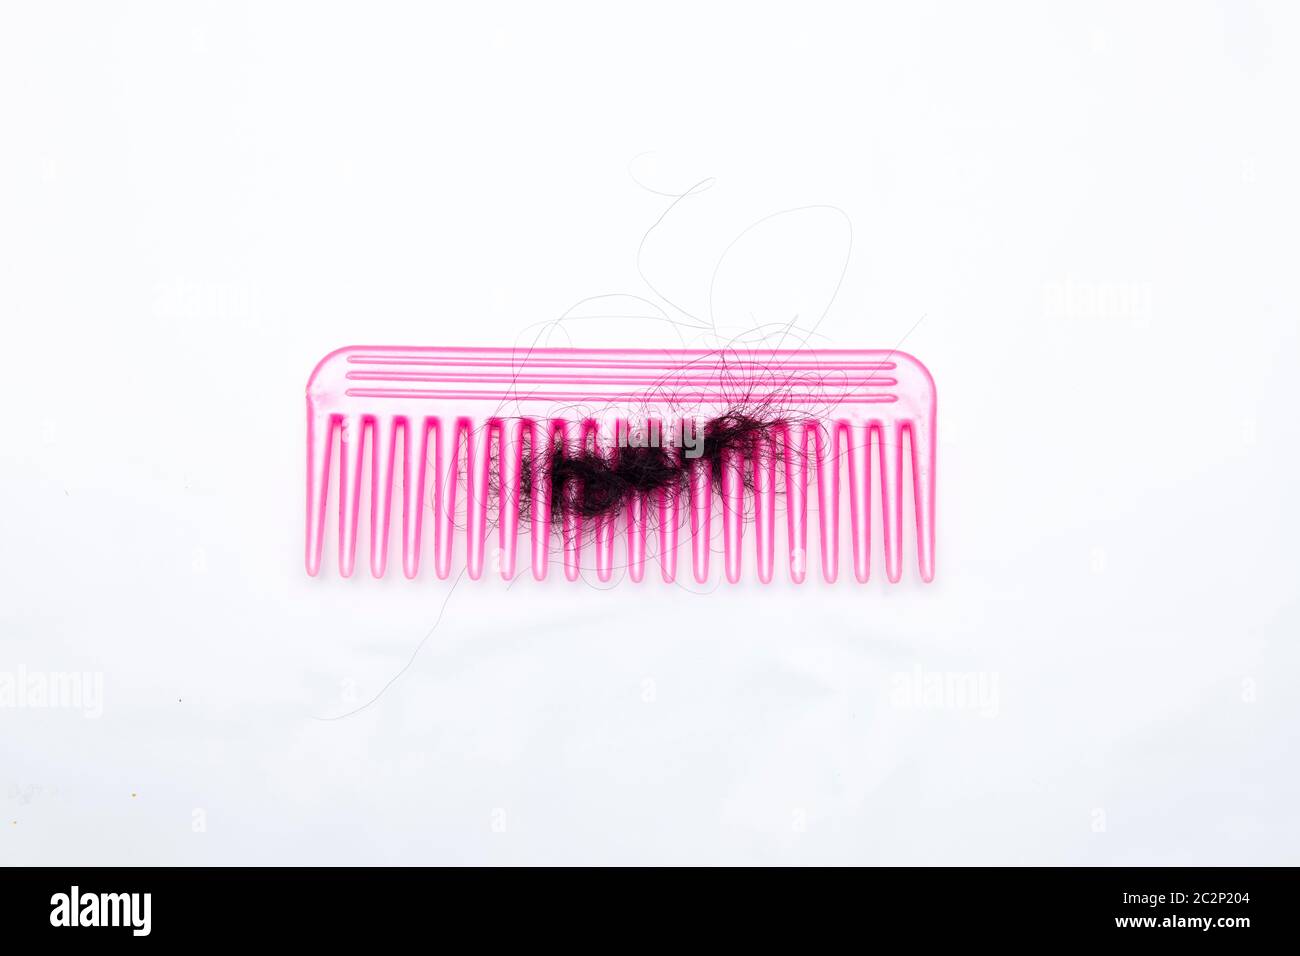 fallen hair stuck into comb Stock Photo